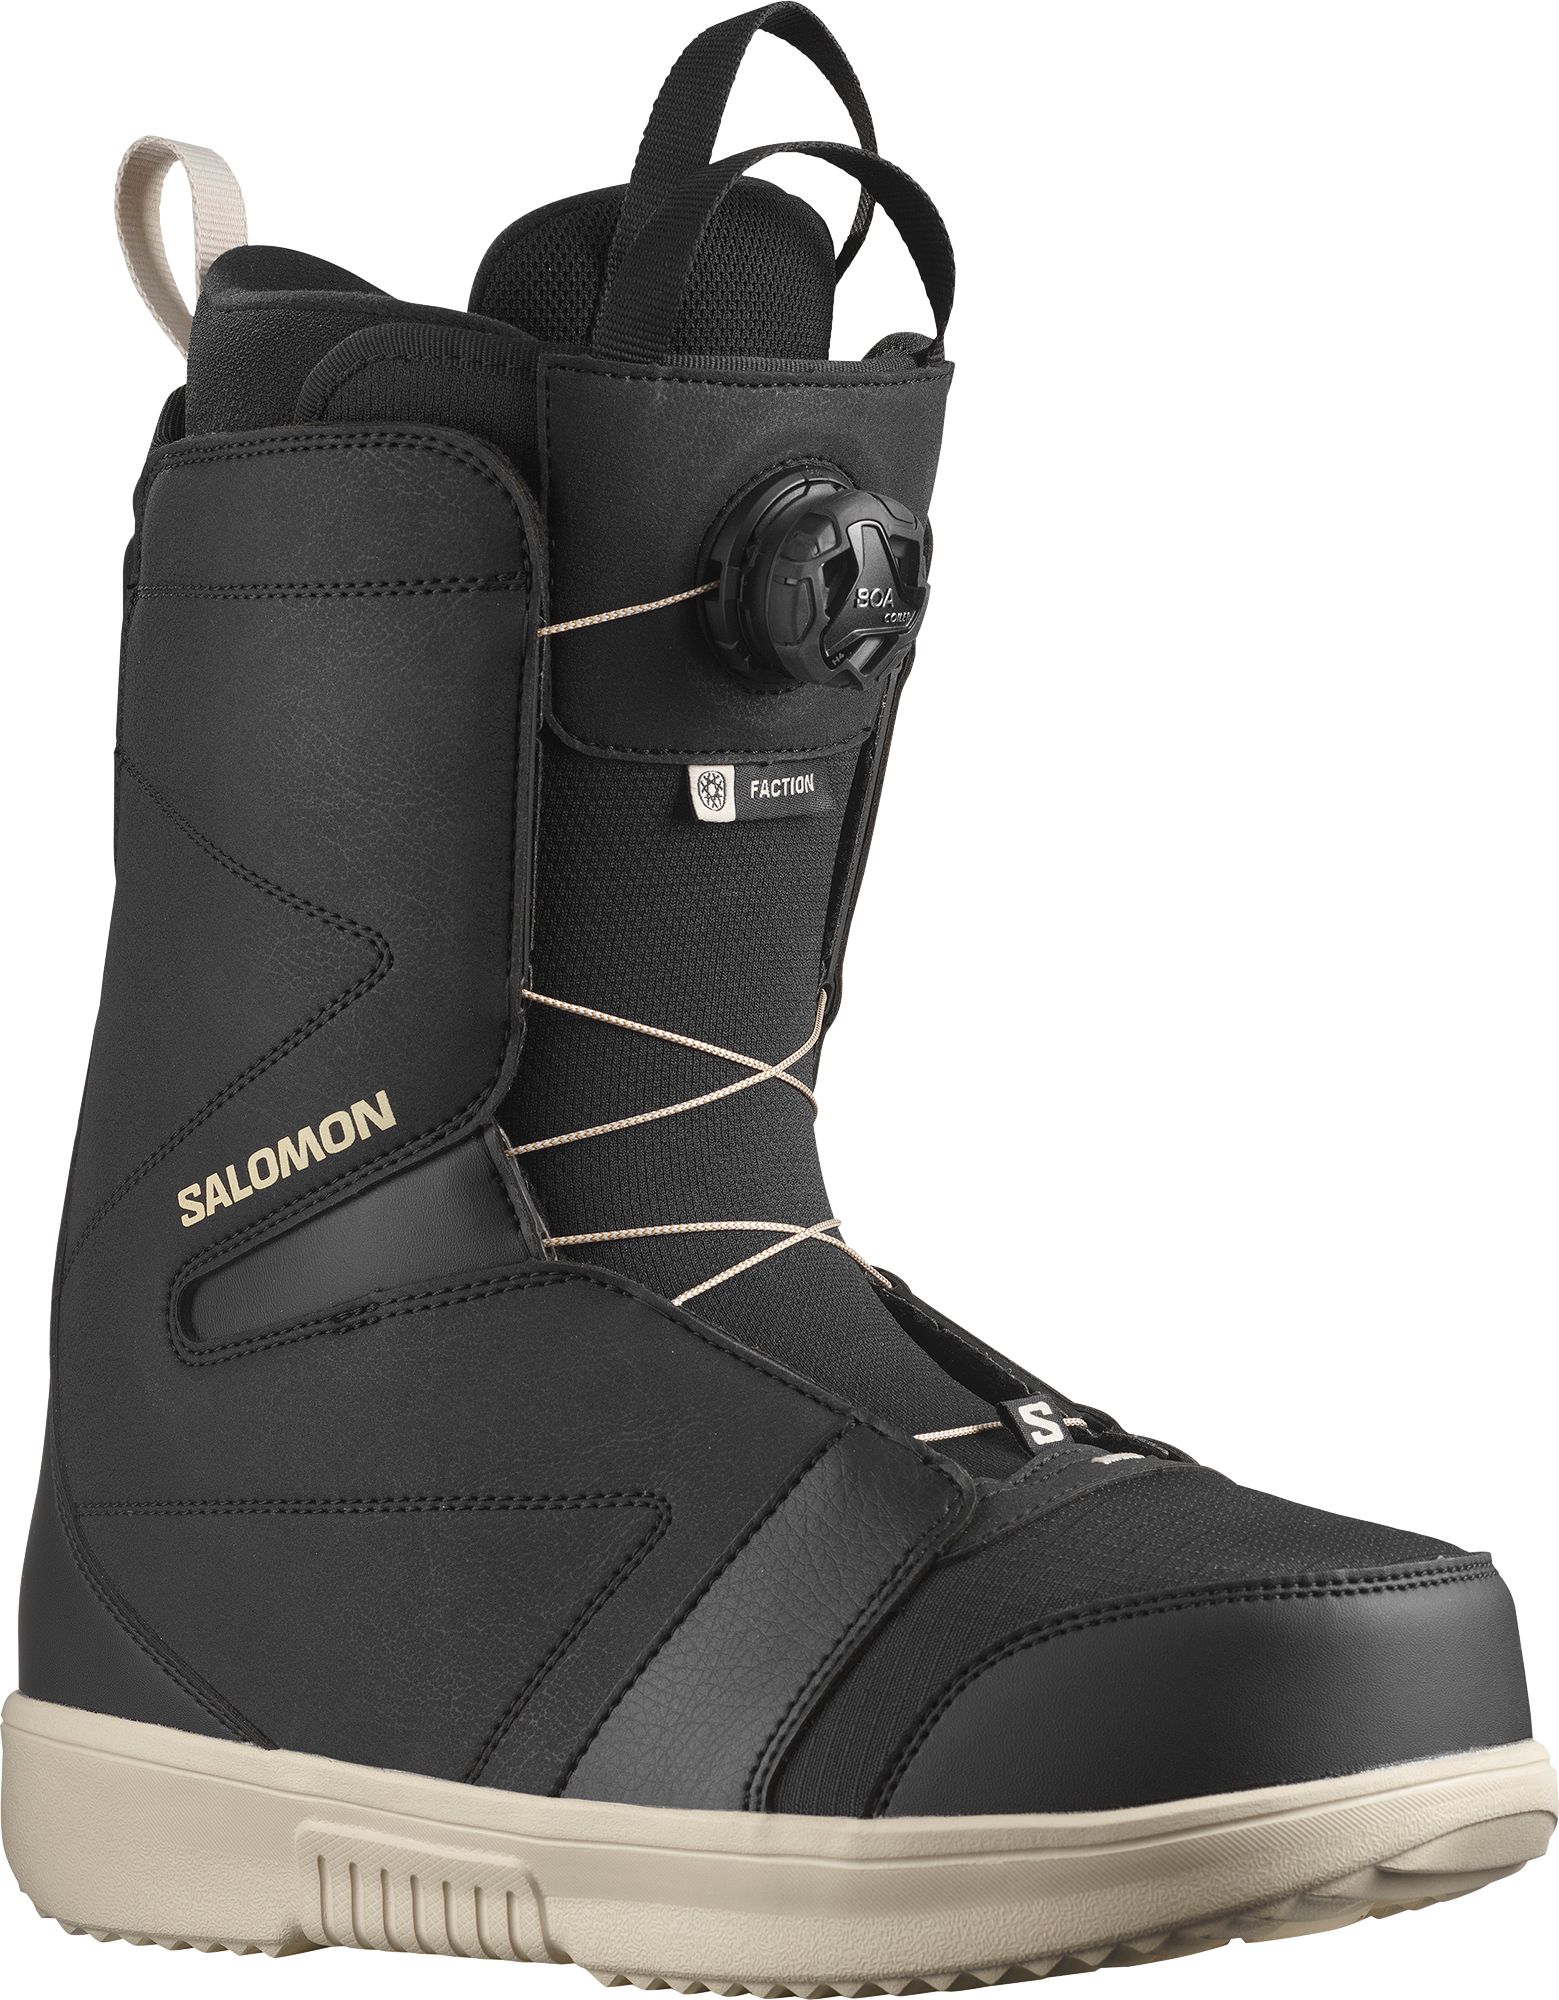 Photos - Ski Boots Salomon '23-'24 Faction BOA Snowboard Boots, Men's, Size 12, Black/Black/R 